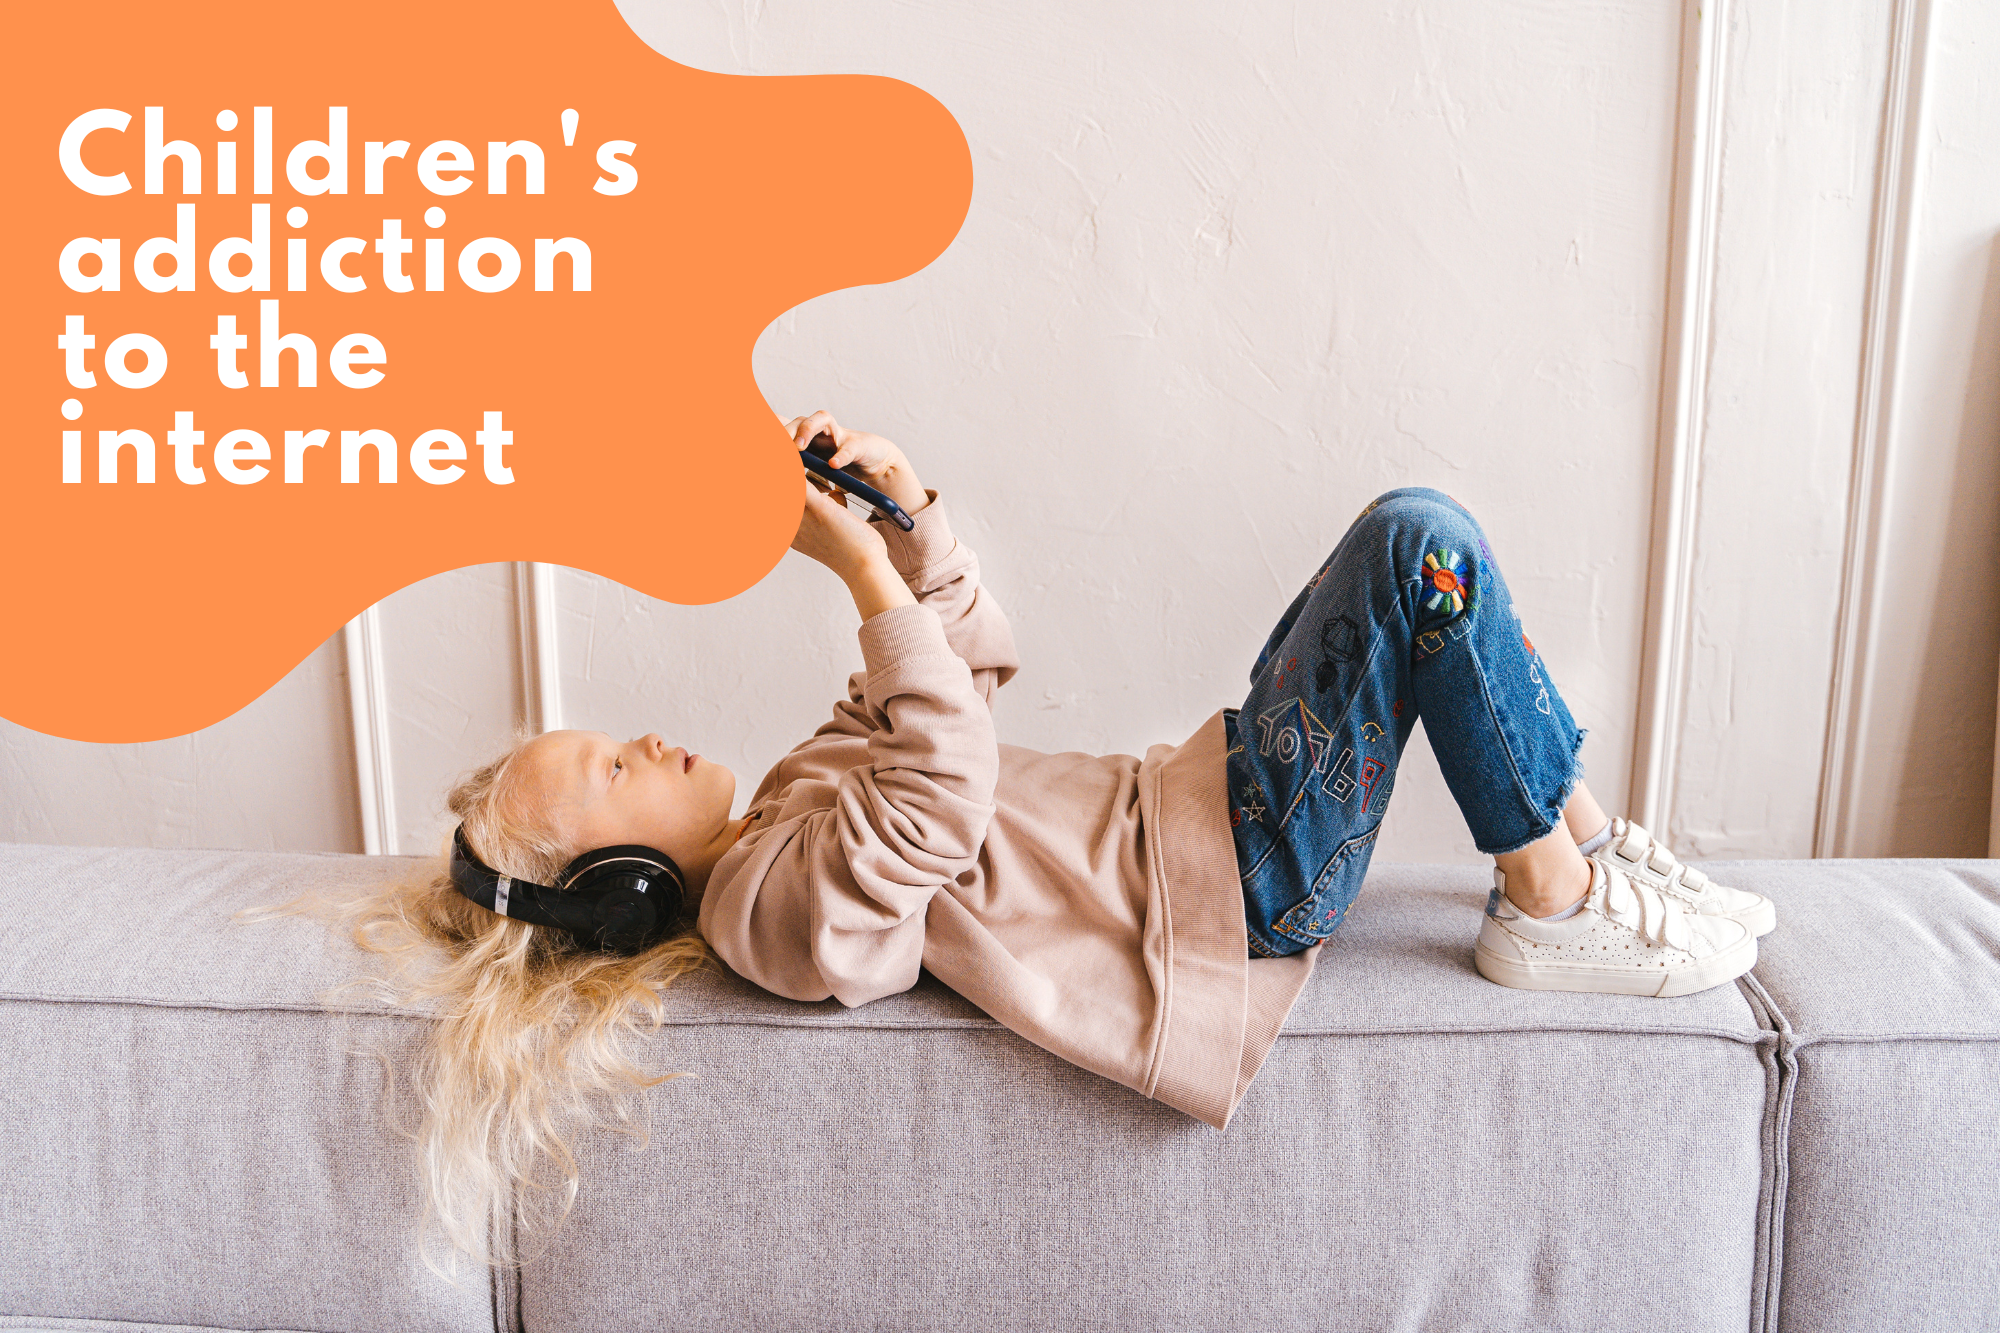 Children's addiction to the internet